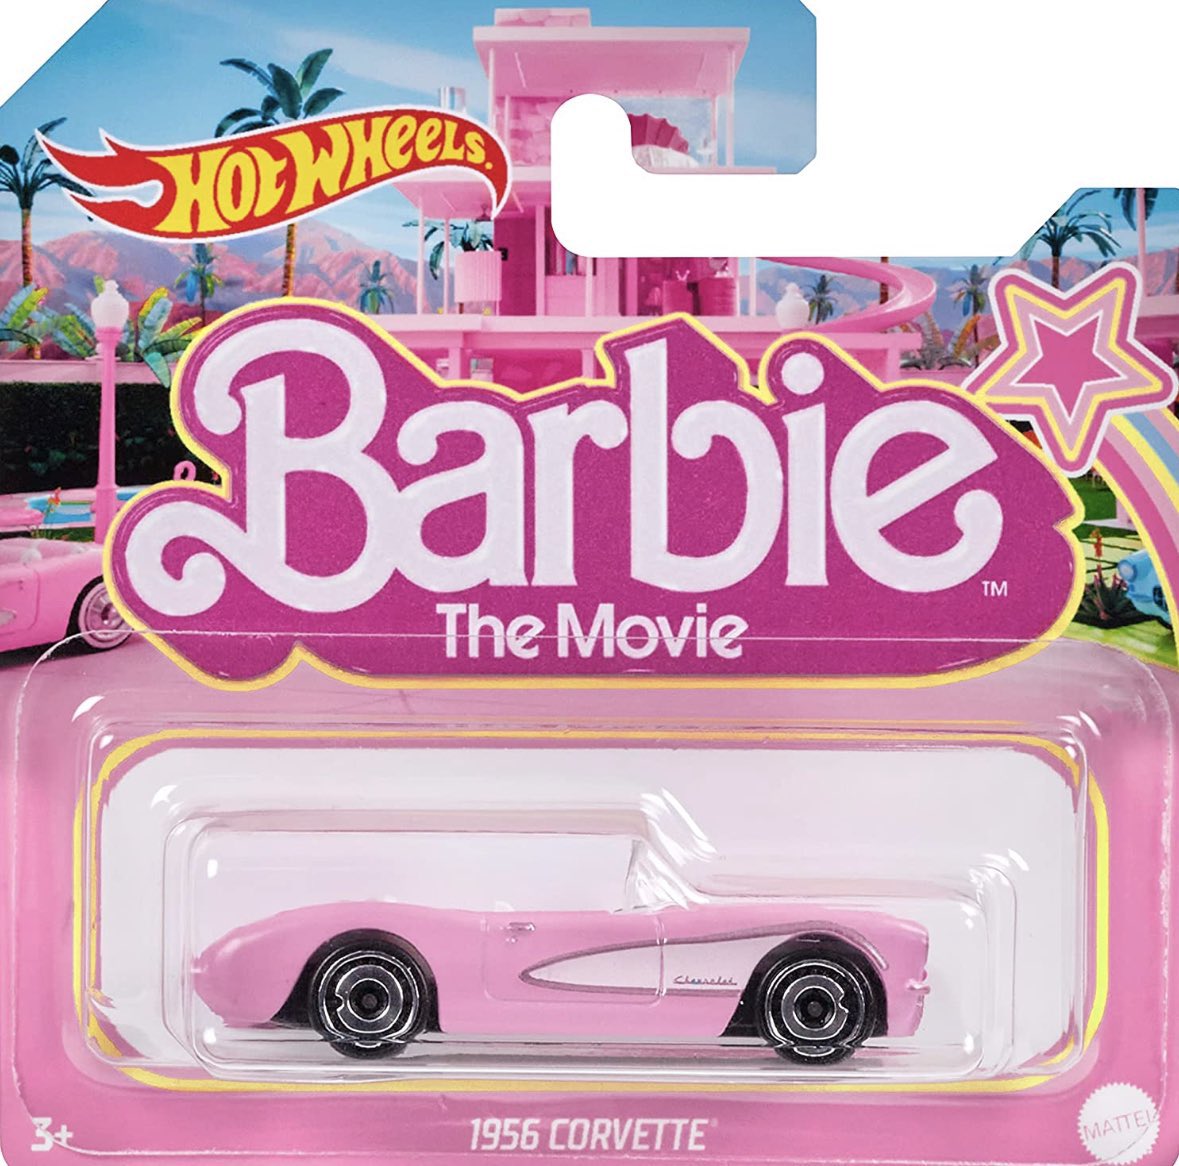 Barbie's Top 3 Promotional Tactics